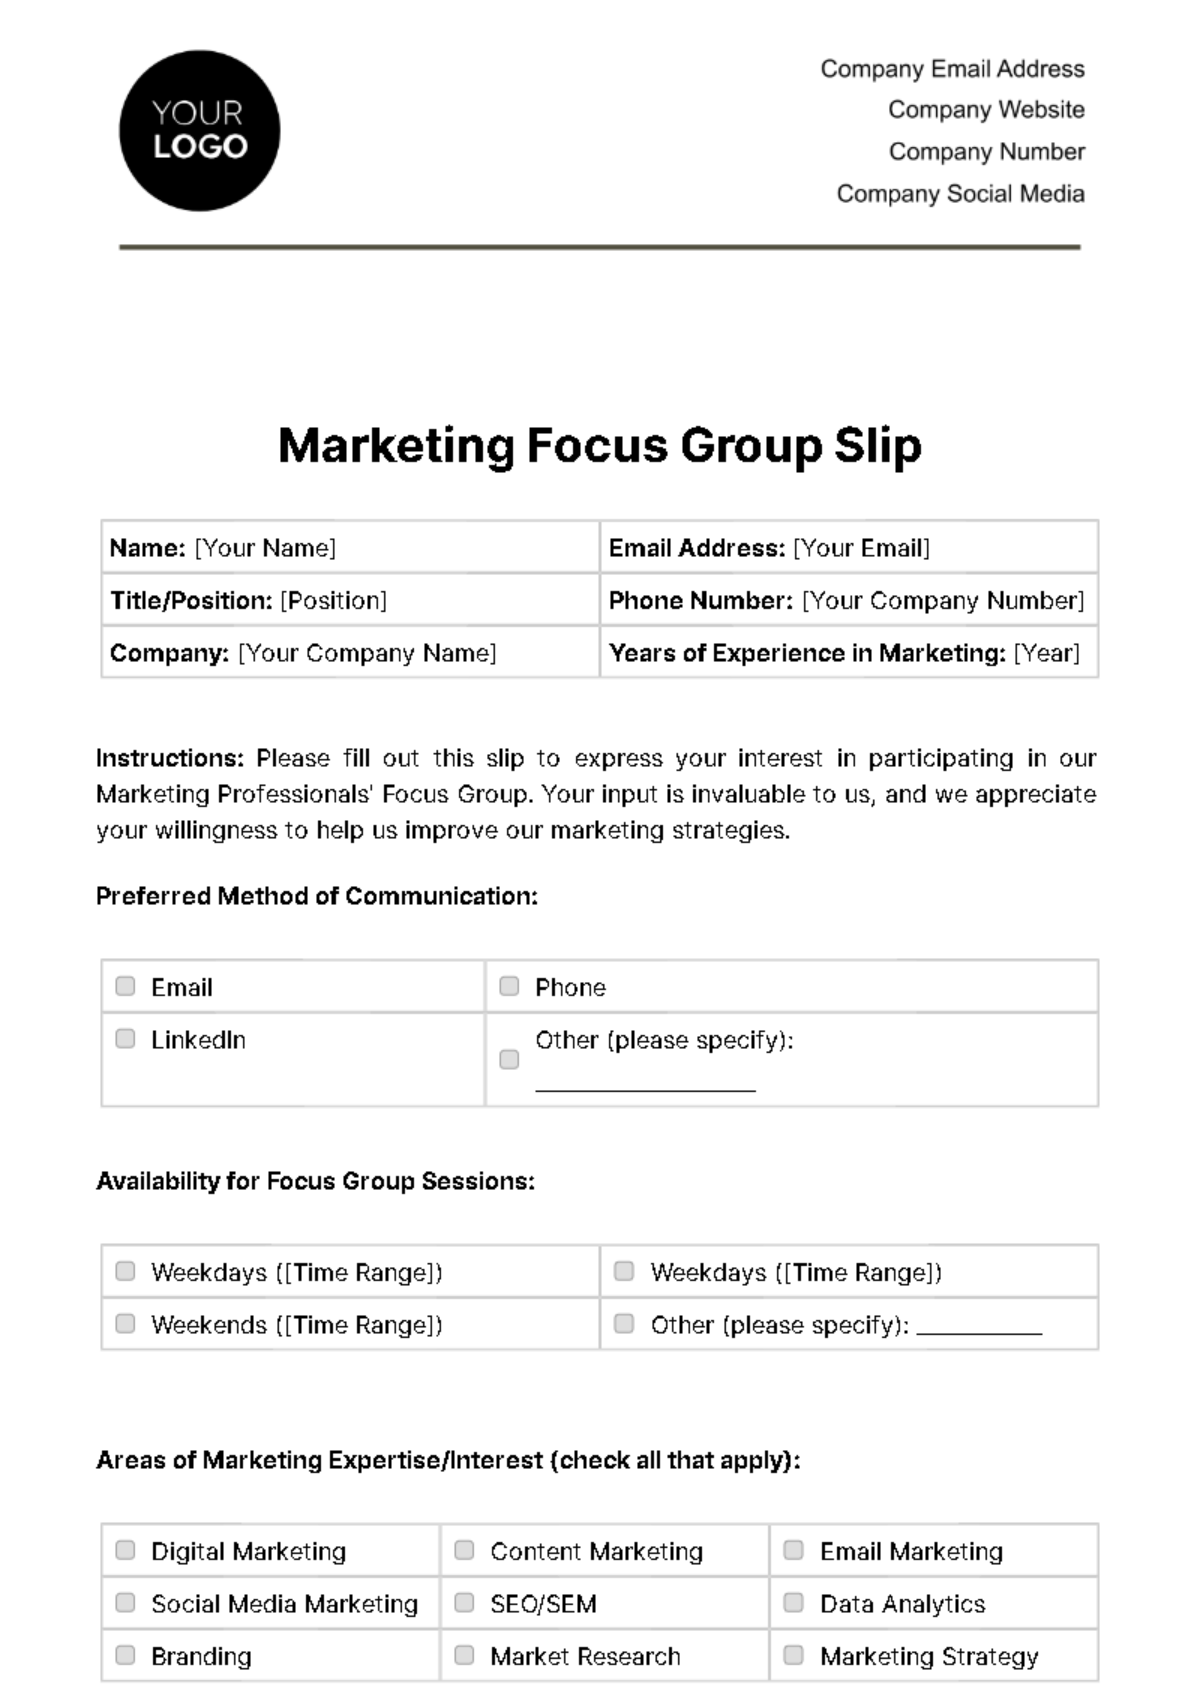 Marketing Focus Group Slip Template